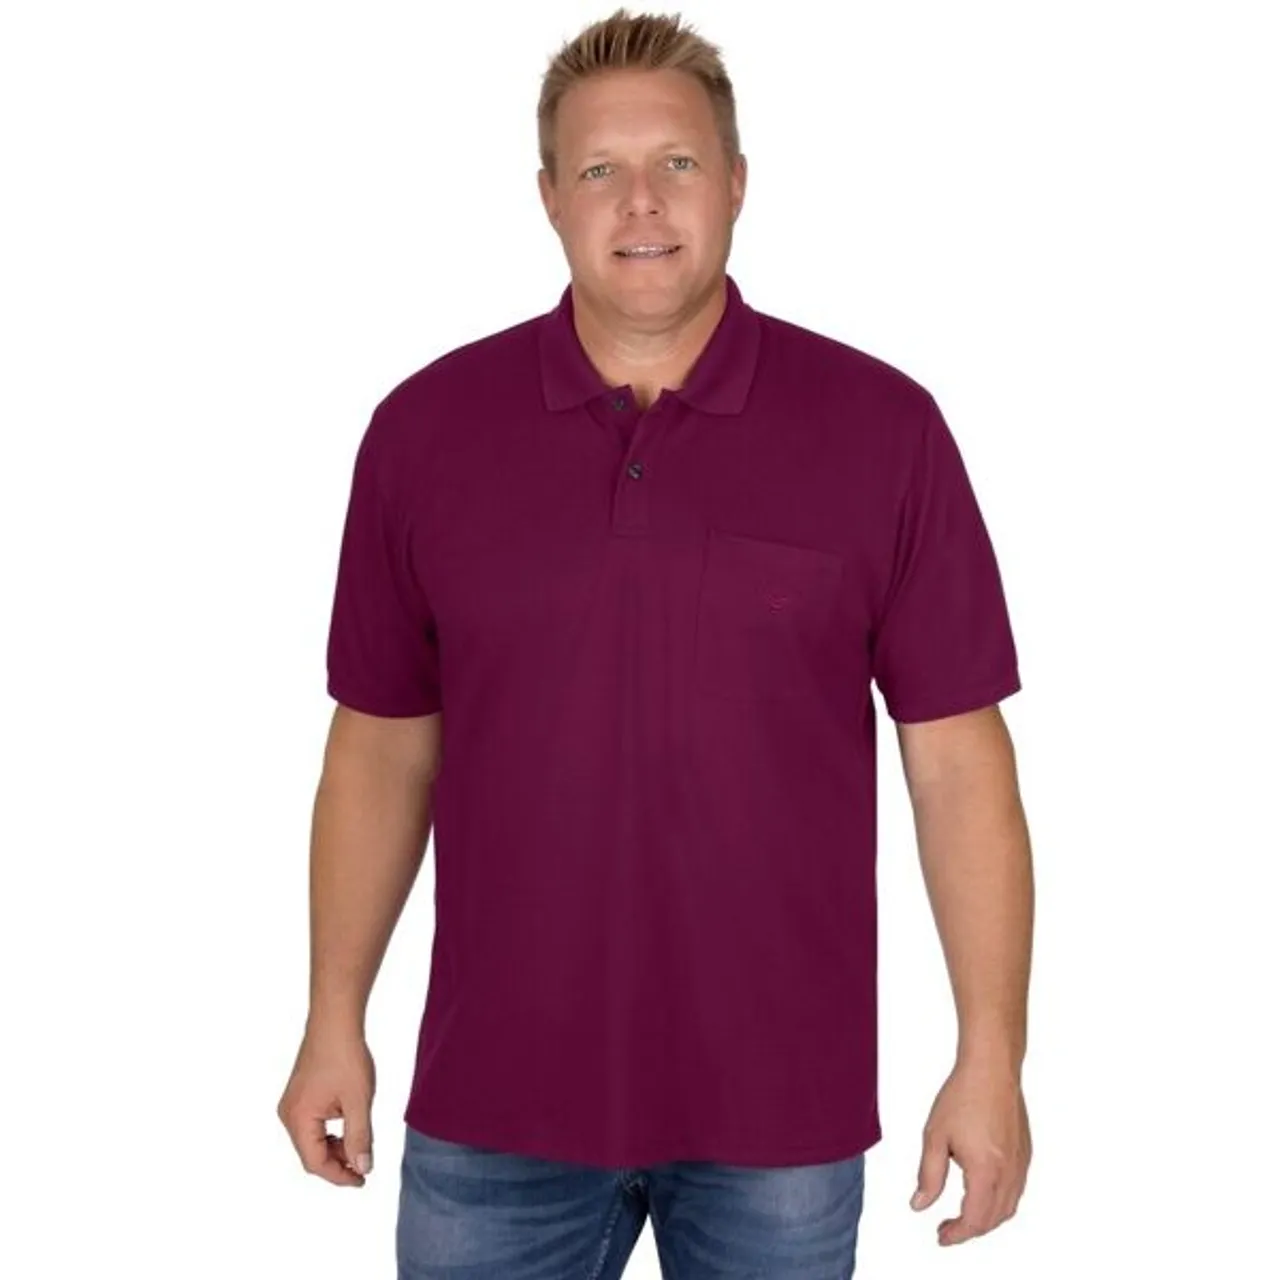 Poloshirt TRIGEMA "TRIGEMA Polohemd mit Brusttasche" Gr. M, rot (sangria) Herren Shirts Kurzarm